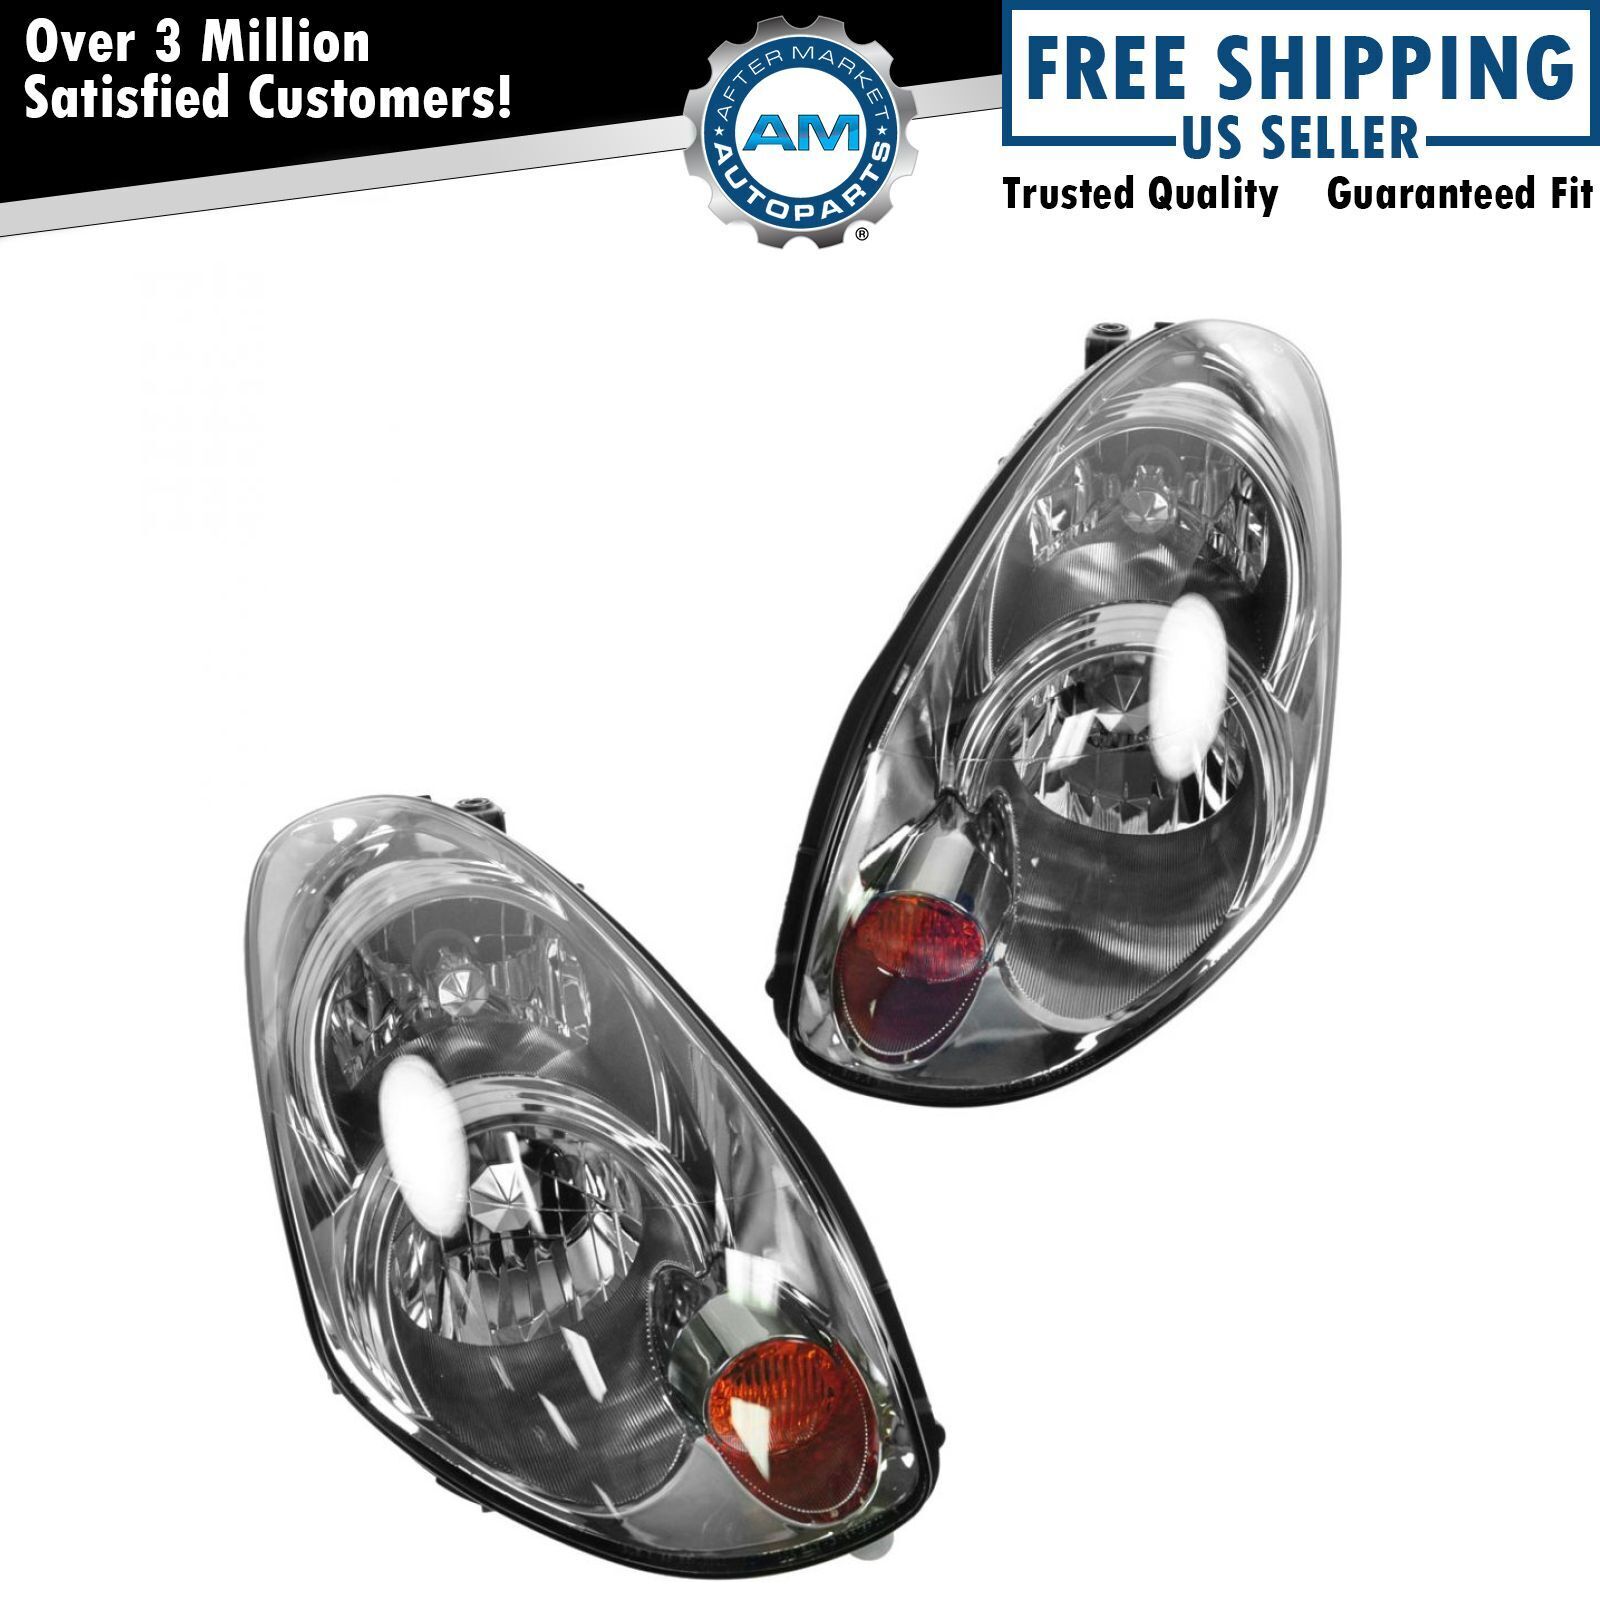 Xenon HID Headlight Lamp Pair Set of 2 NEW for 05-06 Infiniti G35 Sedan